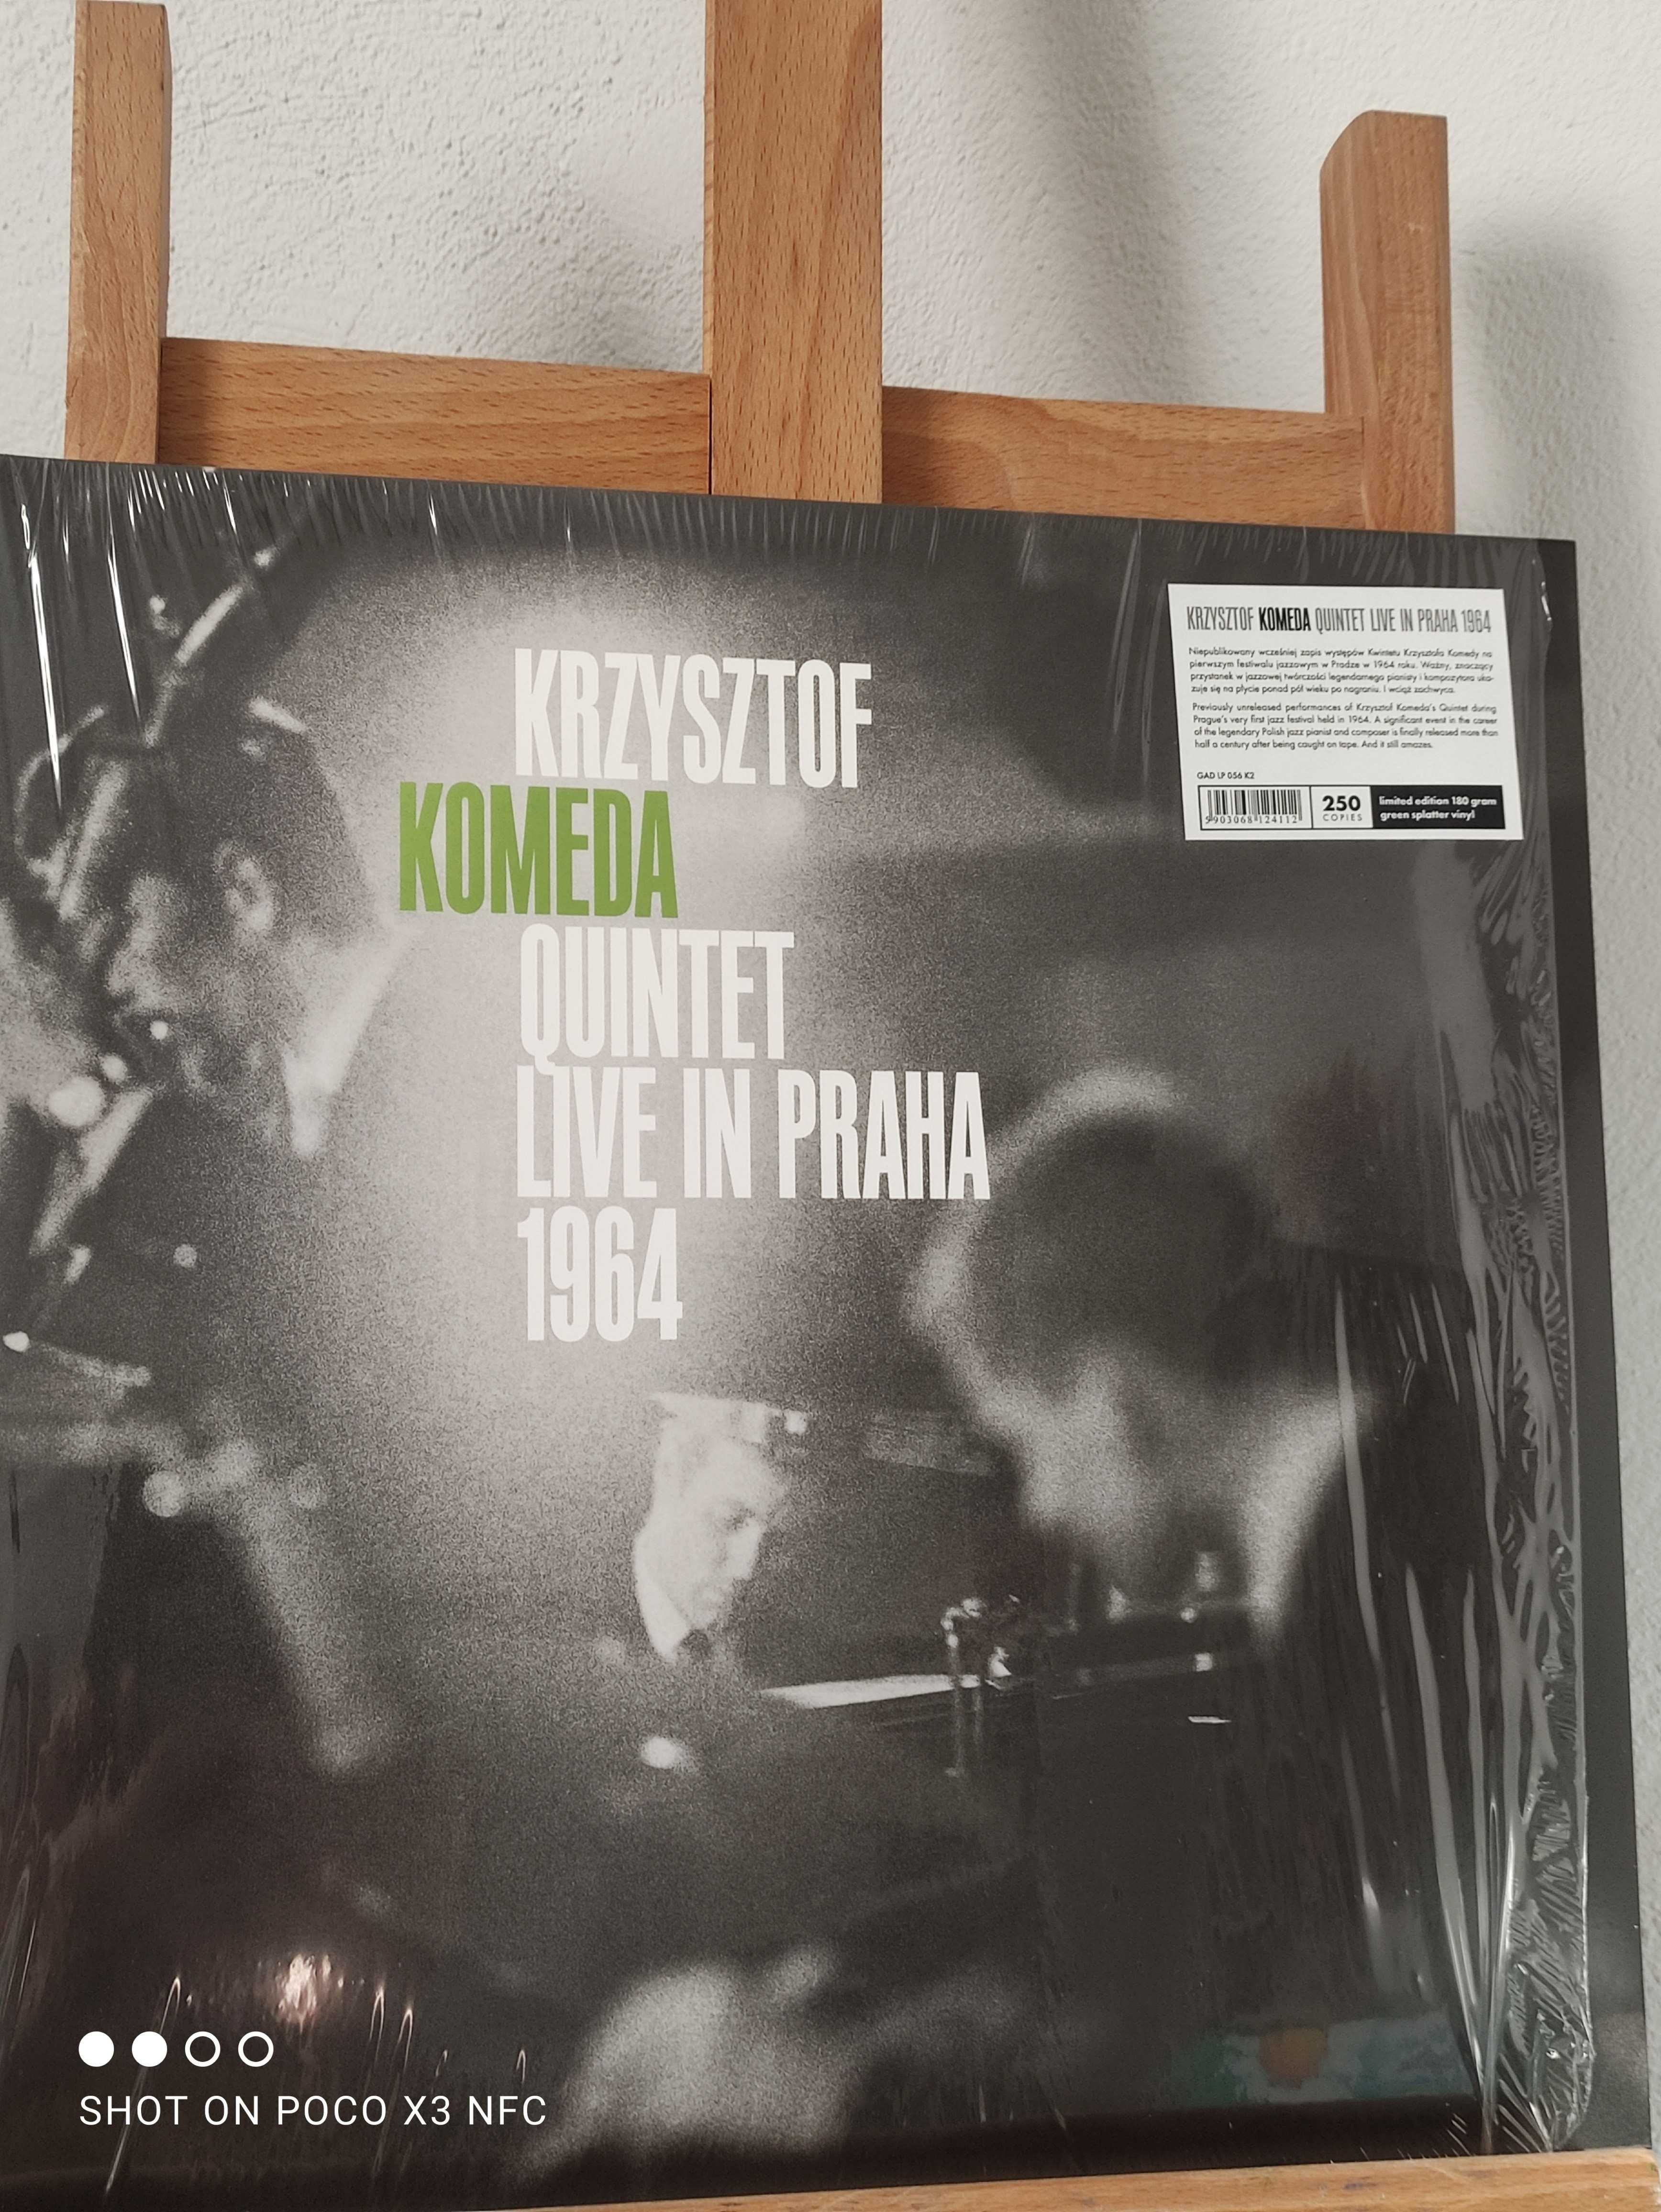 KOMEDA QUINTET – Live in Praha 1964 2LP zielone płyty winylowe JAZZ